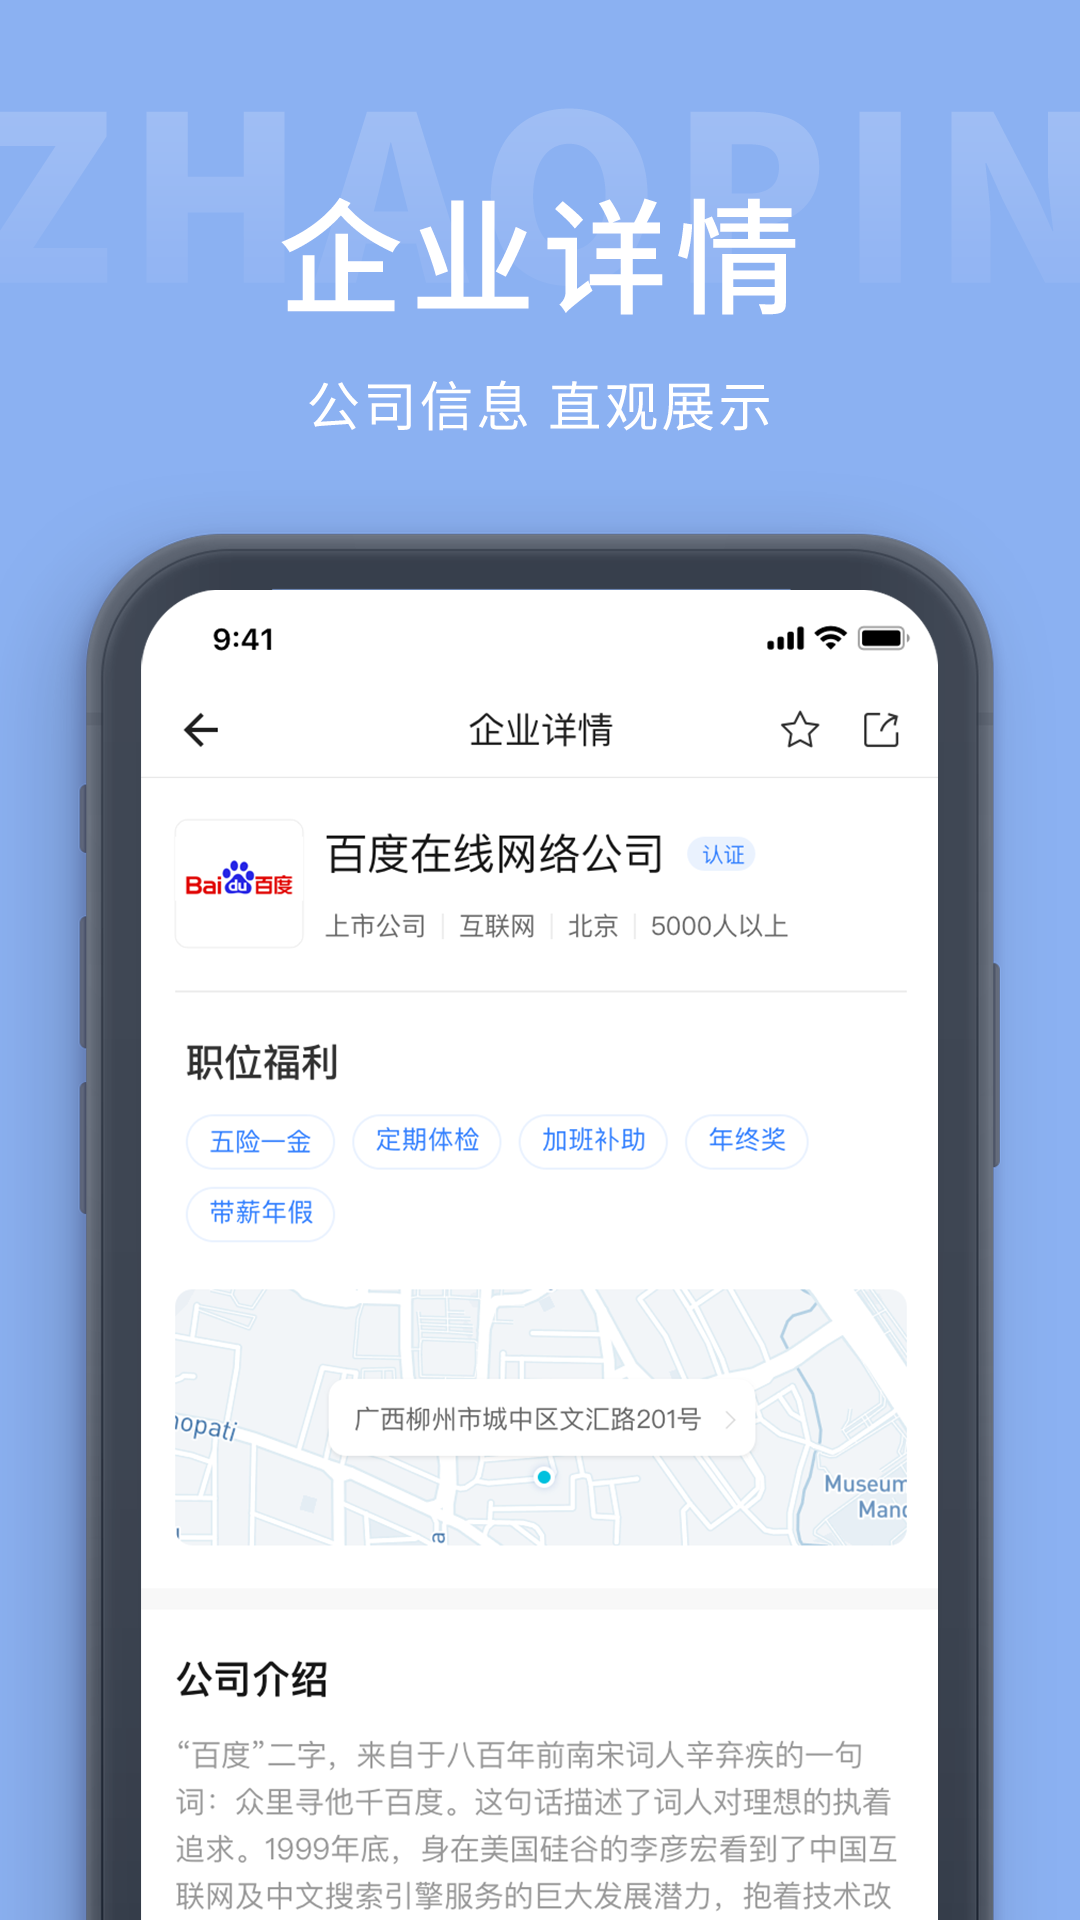 桂林招聘网app v1.0.5